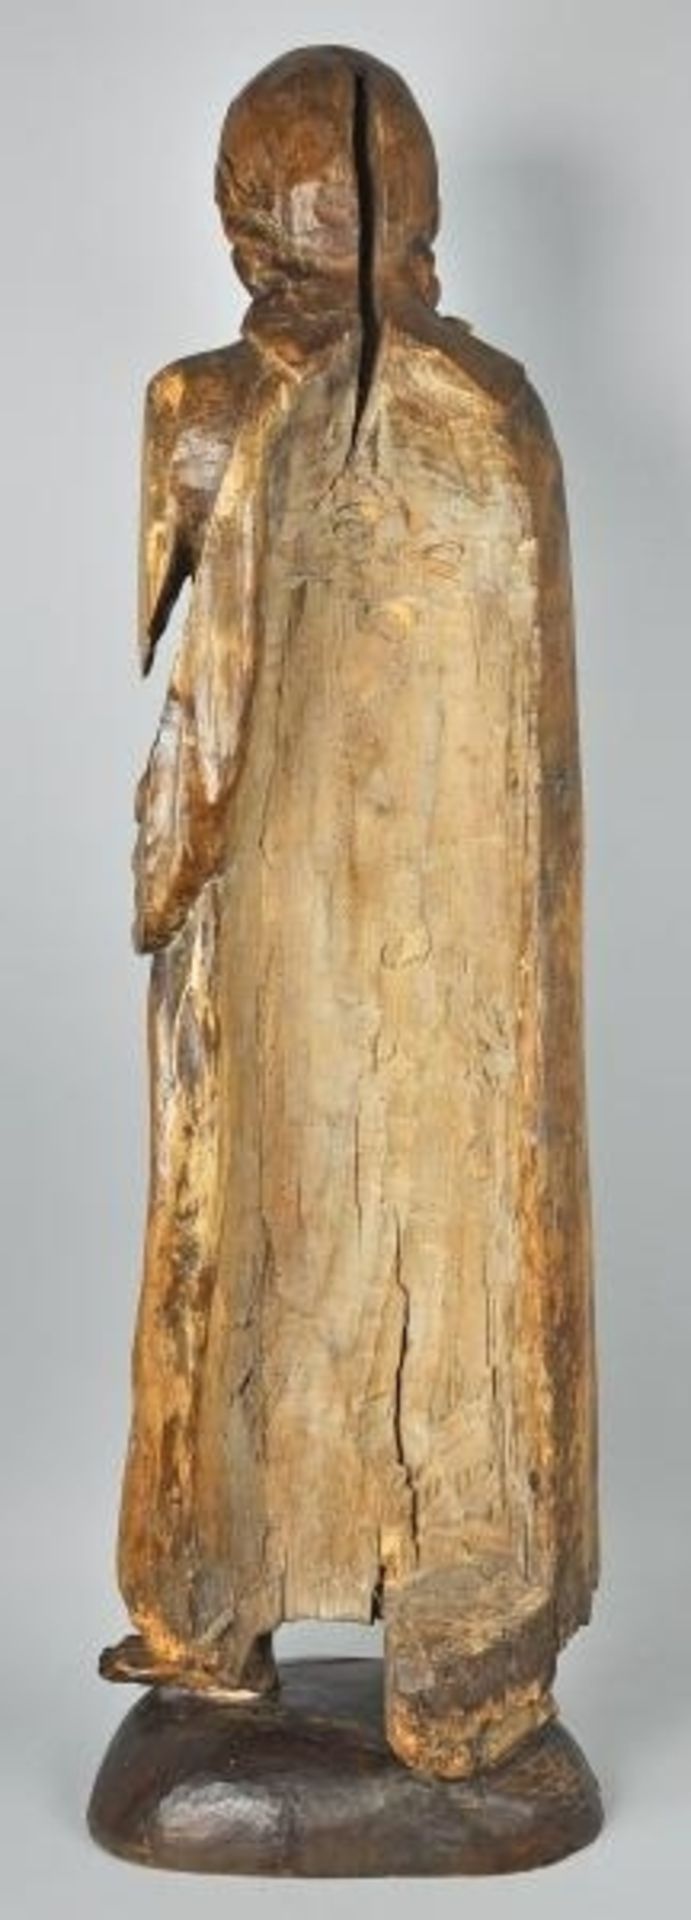 CHRISTUS 3/4 rund geschnitzte Holzfigur, Rückseite gehöhlt, 17./18.Jh, auf späterer ovaler Basis, - Image 6 of 7